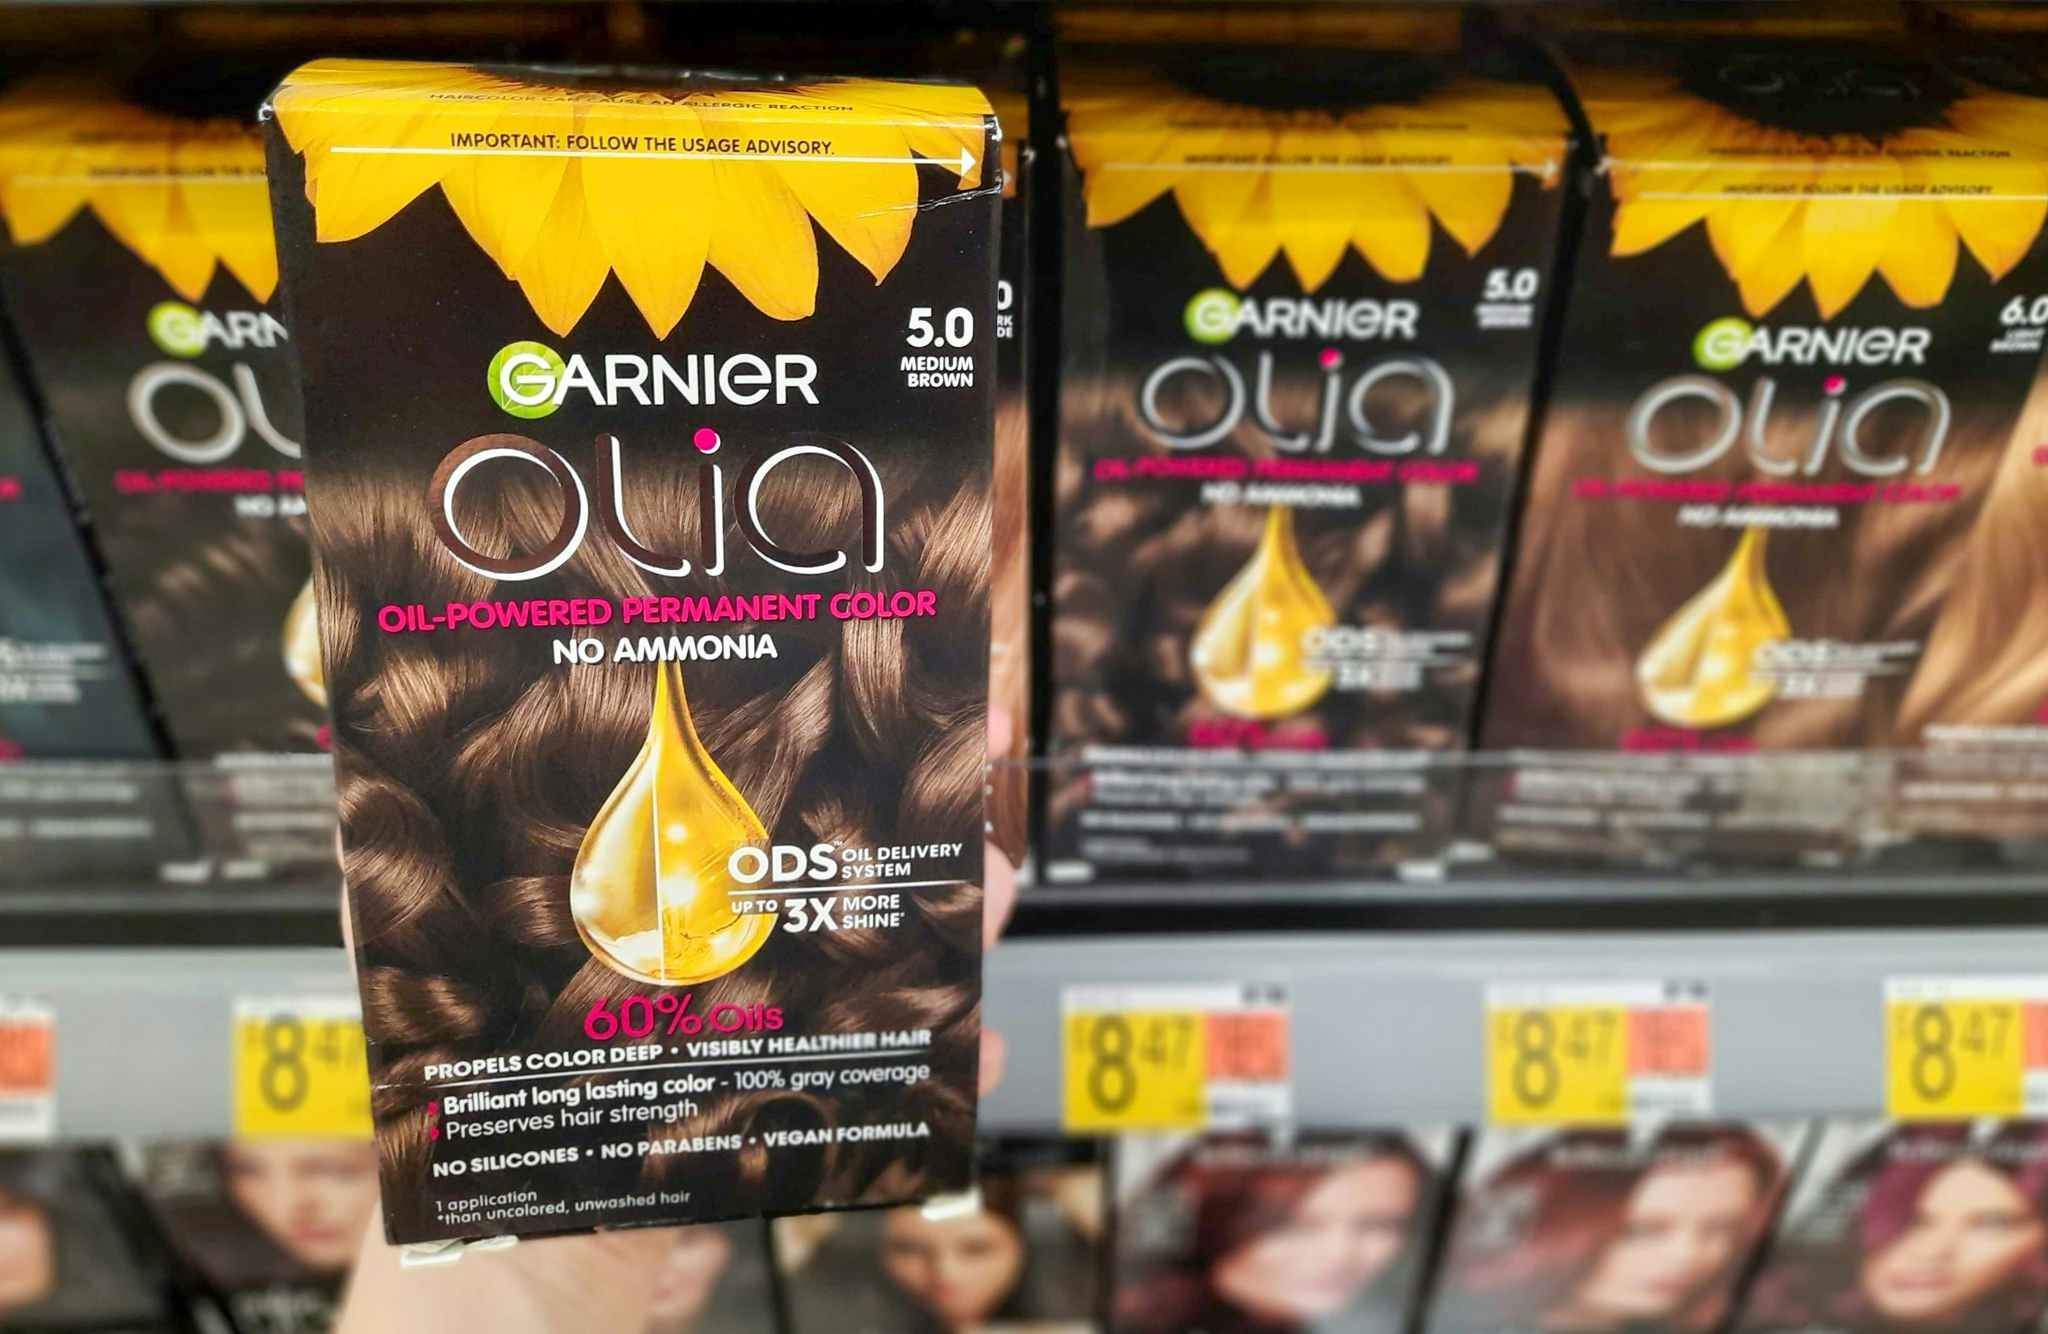 Garnier Olia Hair Color product held in front of display at Walmart